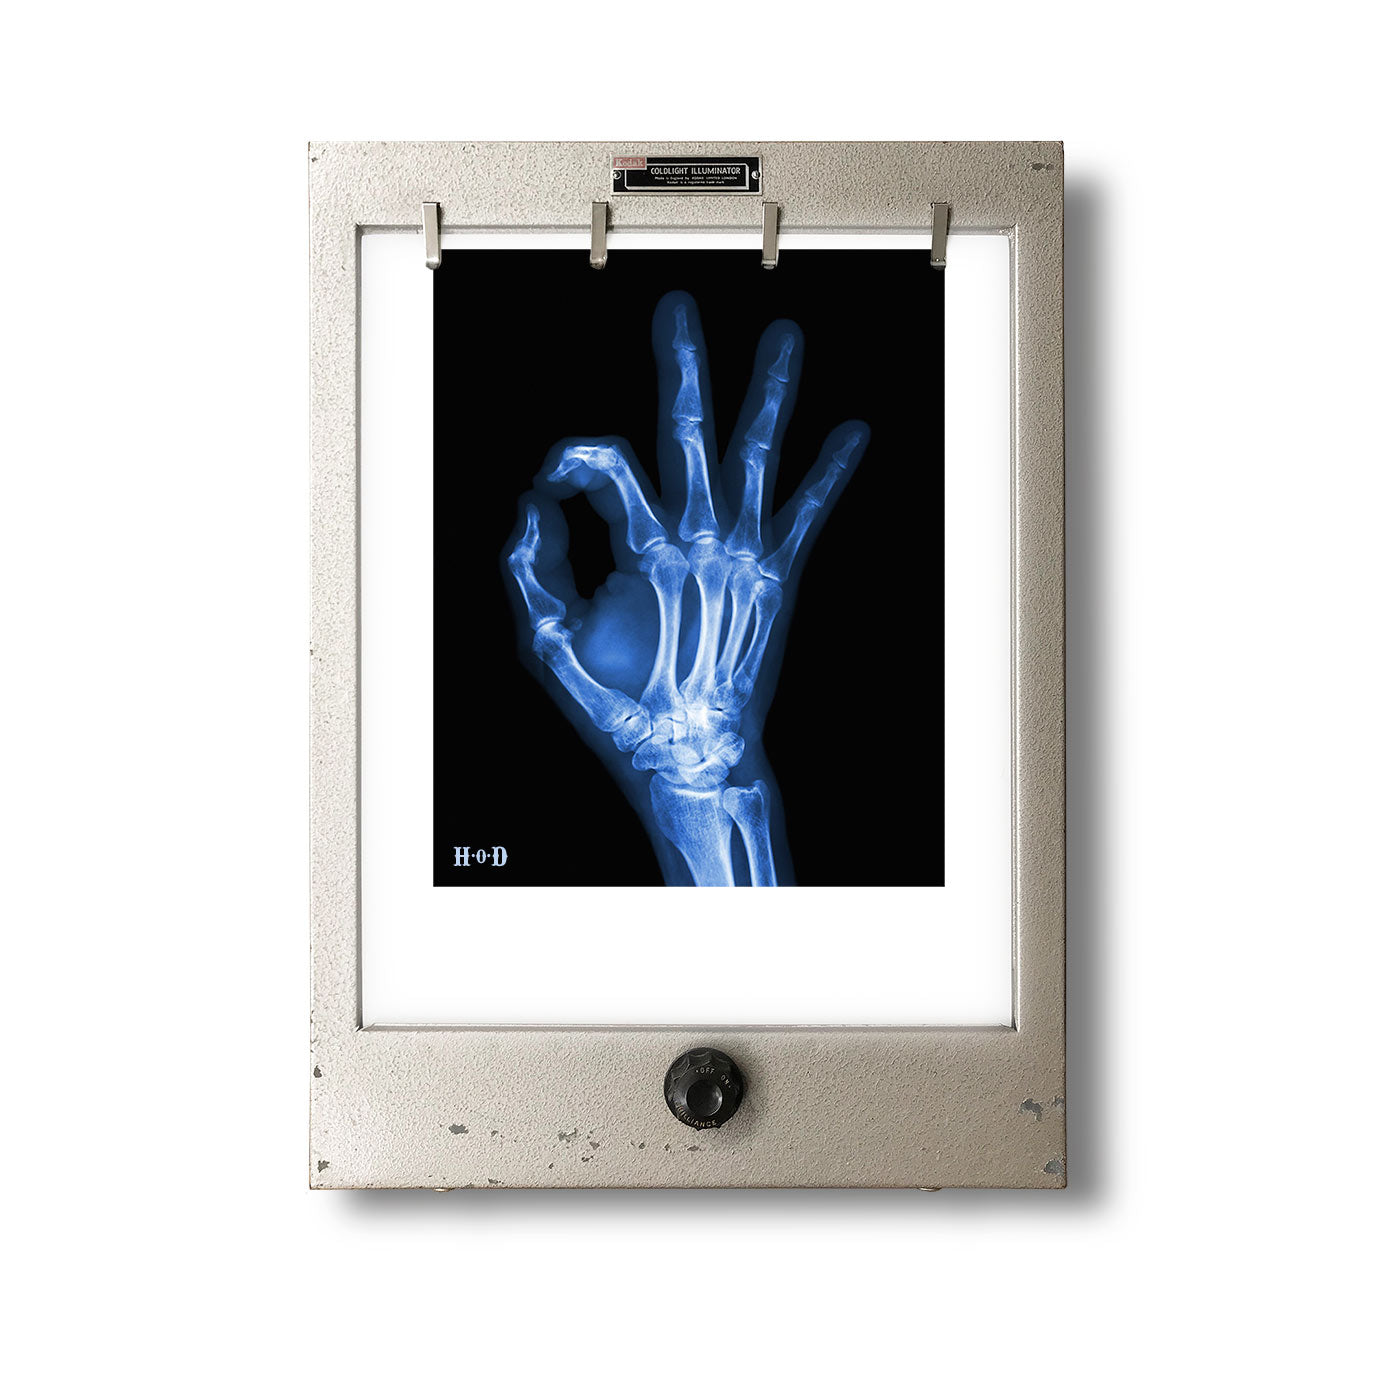 Kodak Hospital X Light Box Intovintage.co.uk